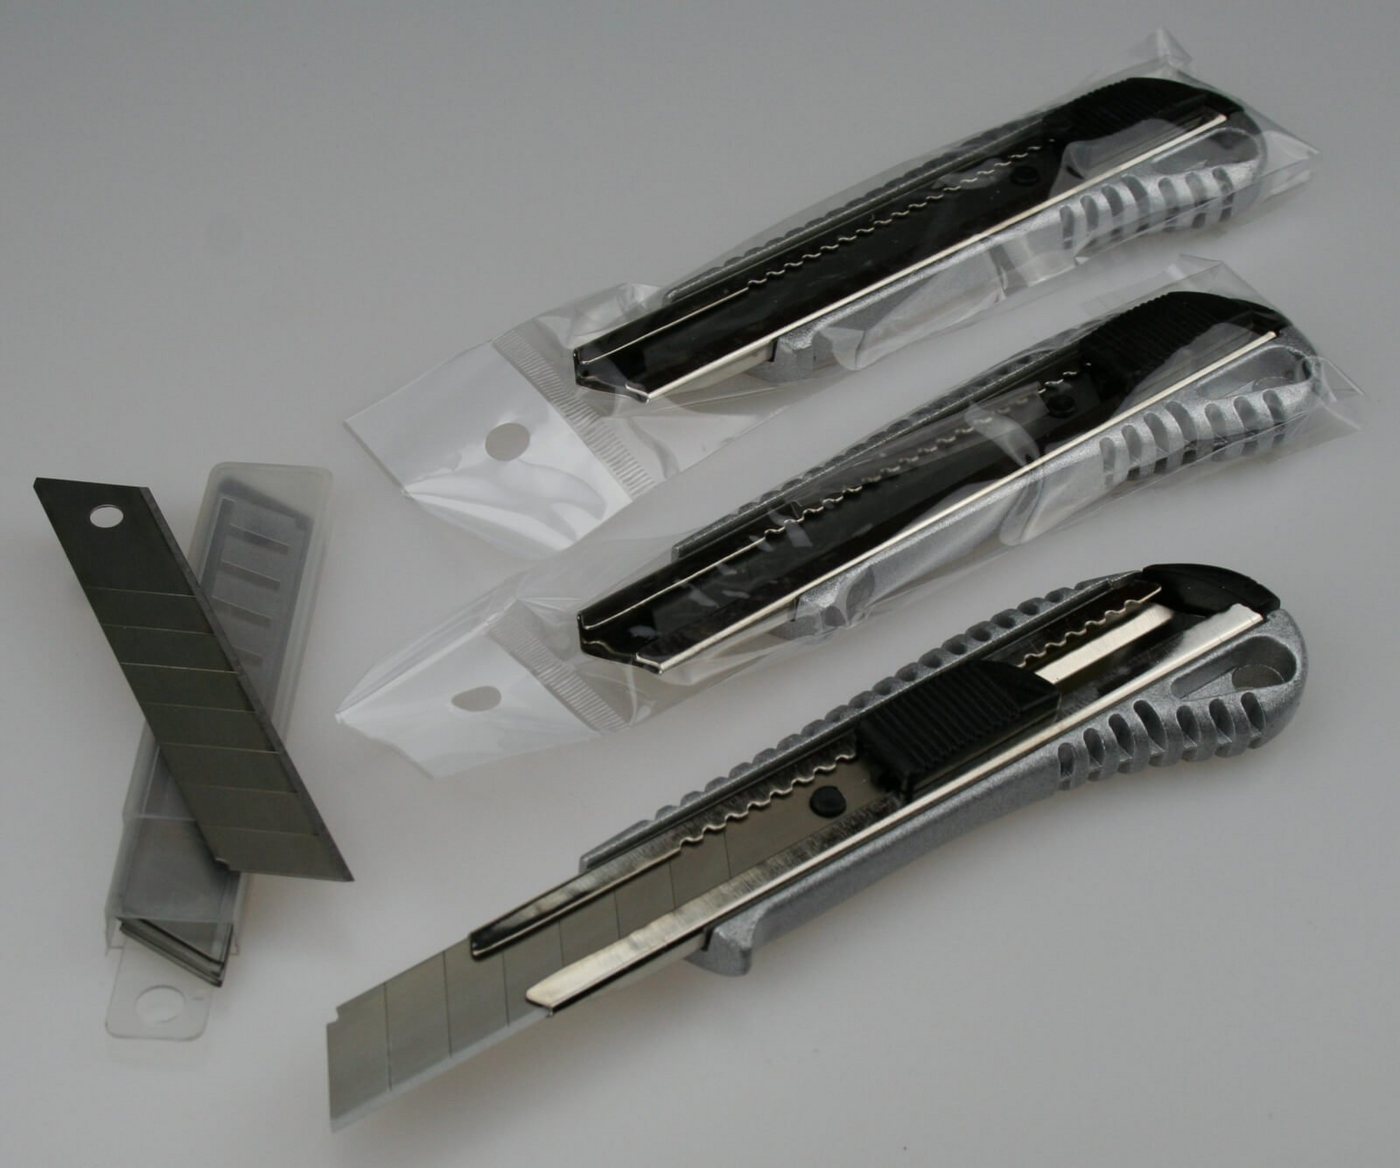 Cuttermesser 3 Cuttermesser Alu + 10 Cutter Abbrechklingen im Köcher von OTTO